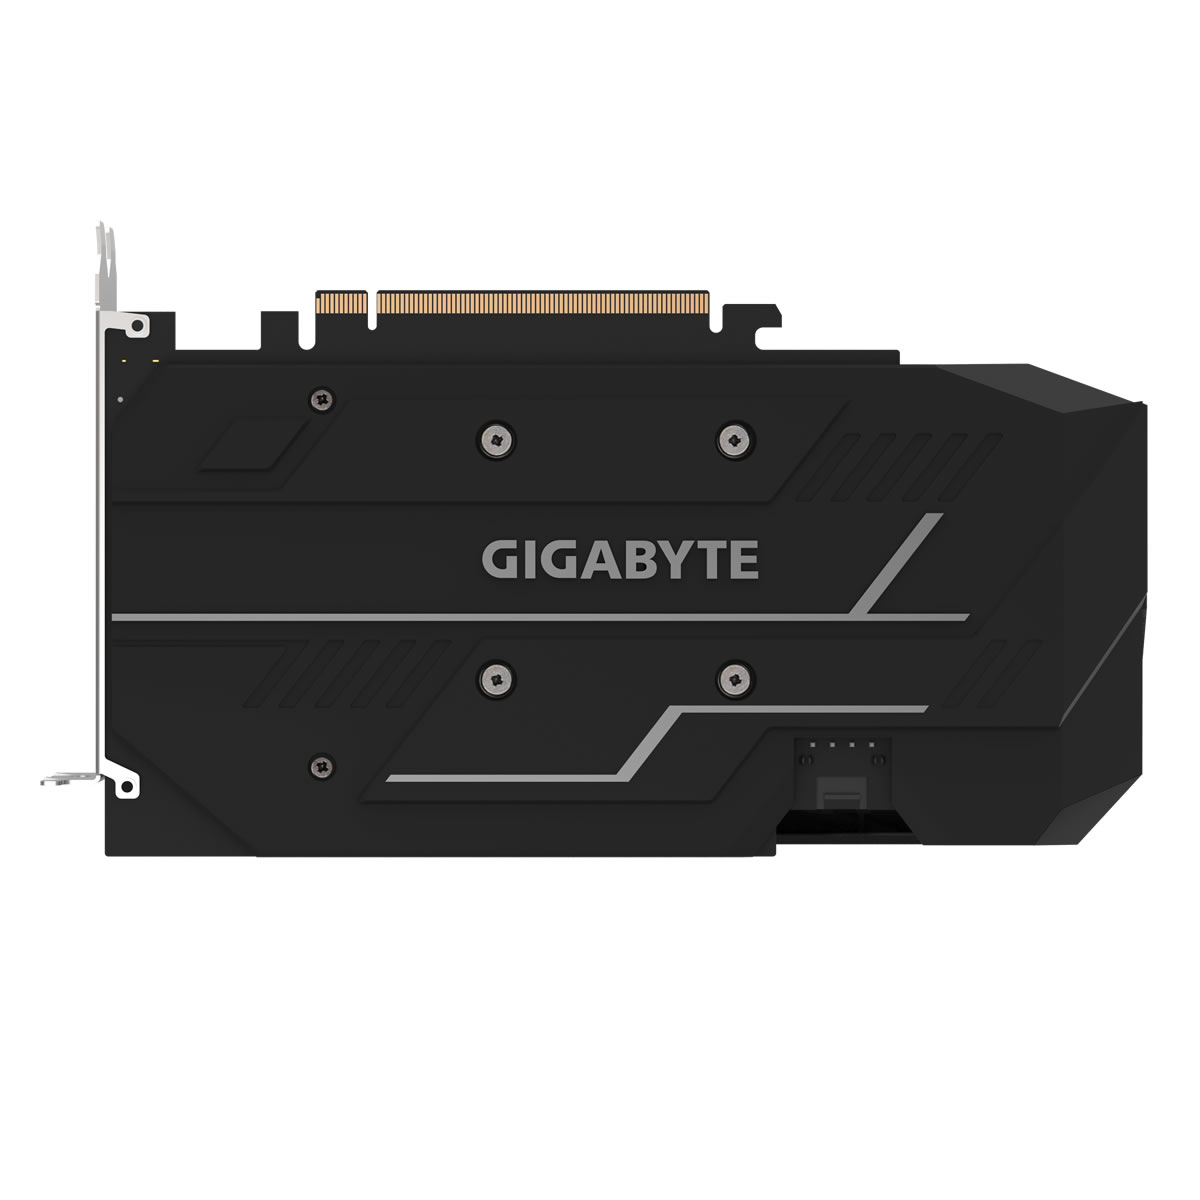 Gigabyte - Gigabyte GeForce GTX 1660 OC 6144MB GDDR5 PCI-Express Graphics Card